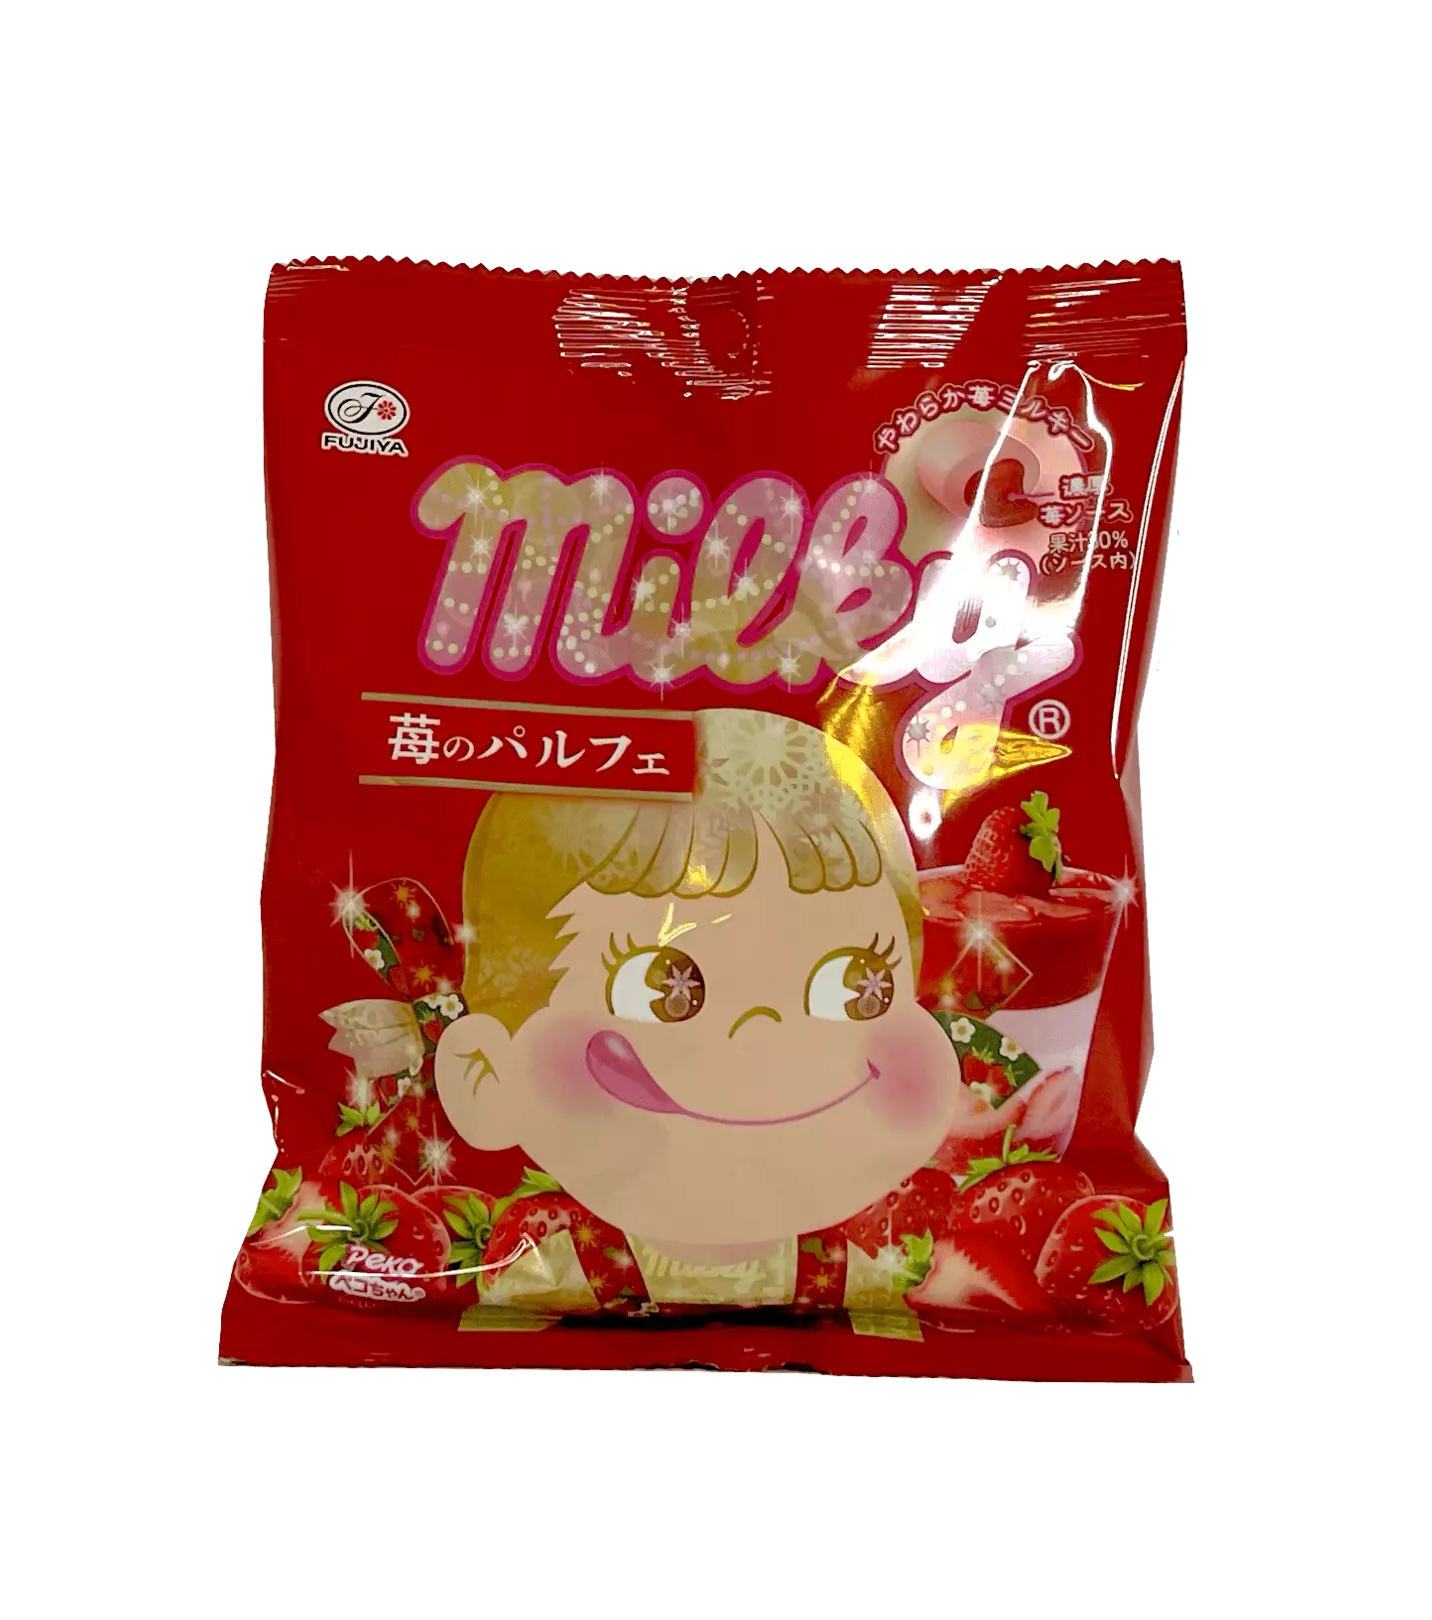 Peco-Chan Milky Strawberry Palfait 76g Fujiya Japan